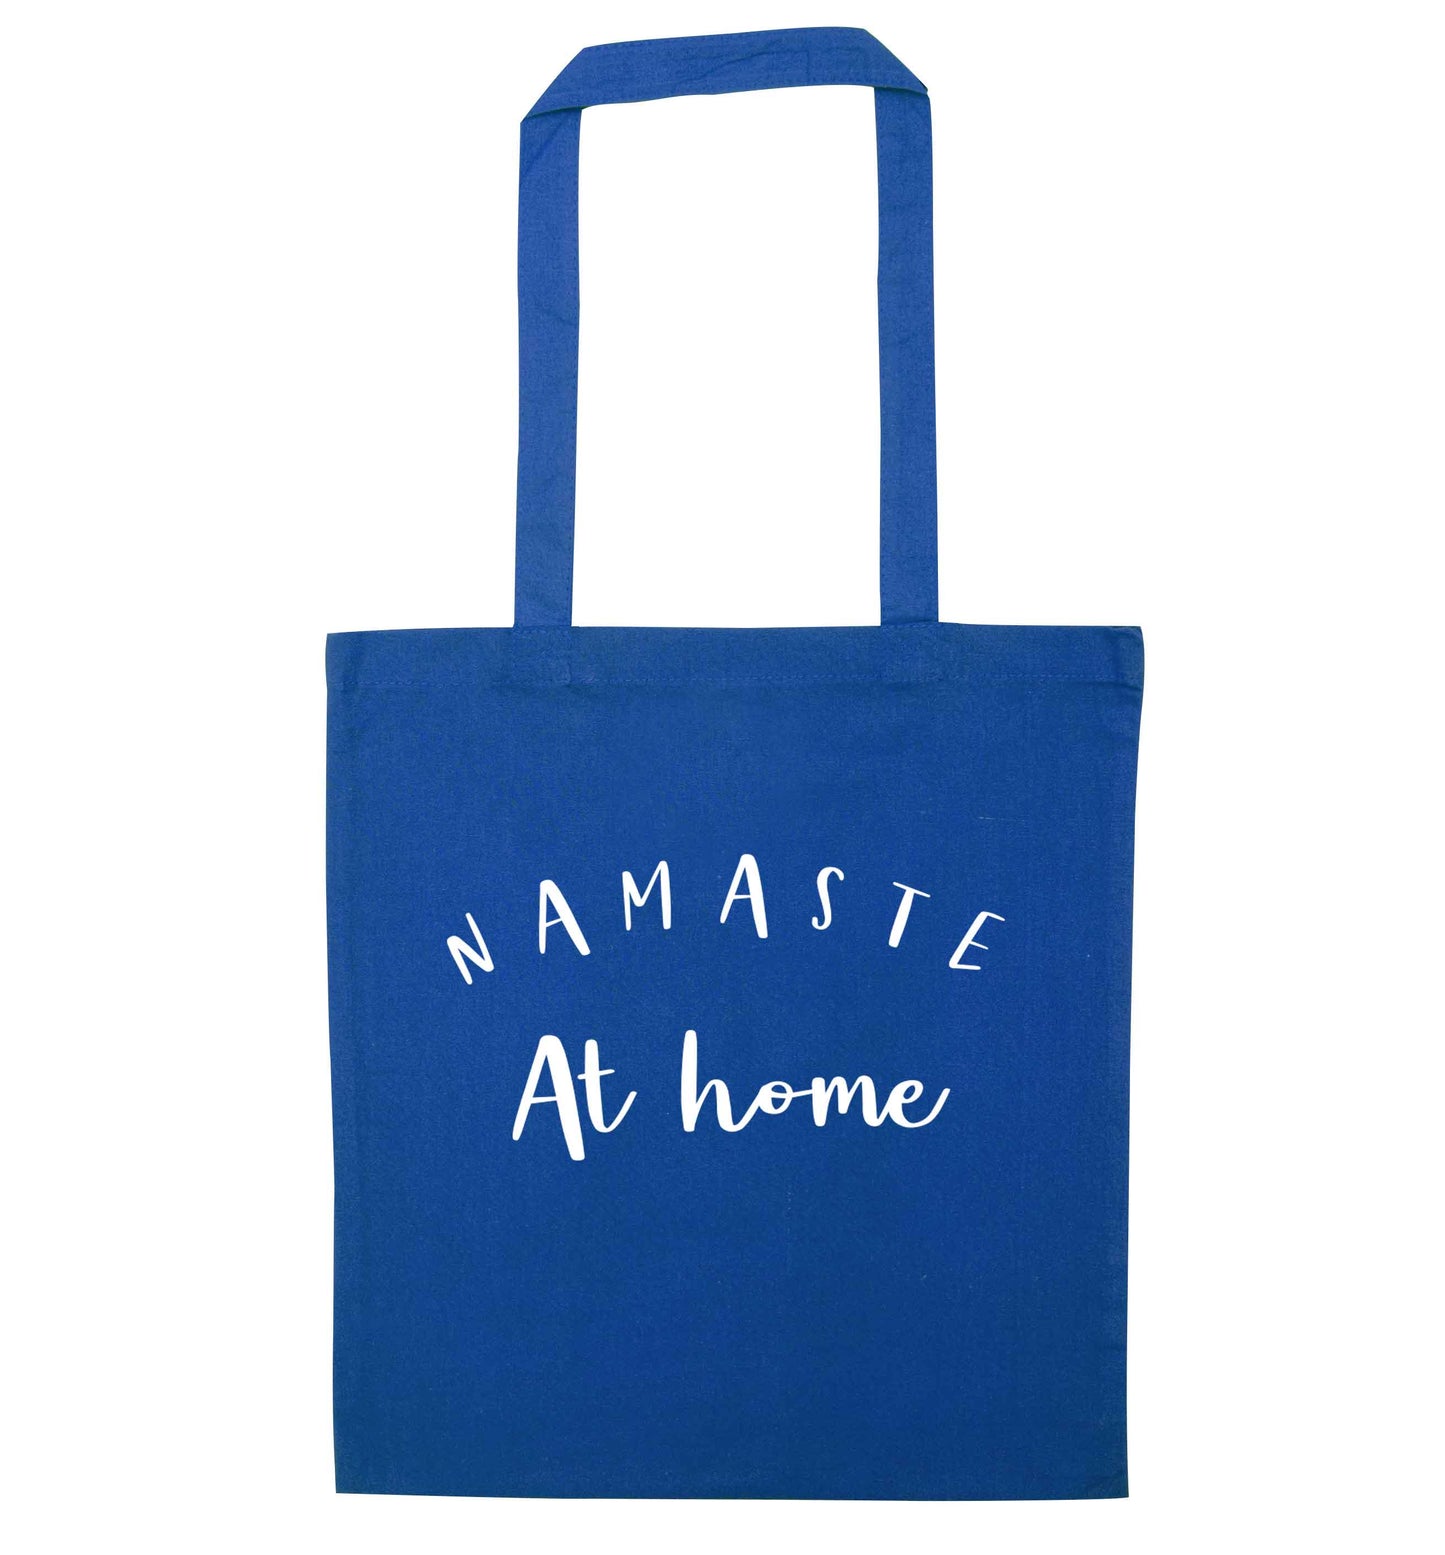 Namaste at home blue tote bag